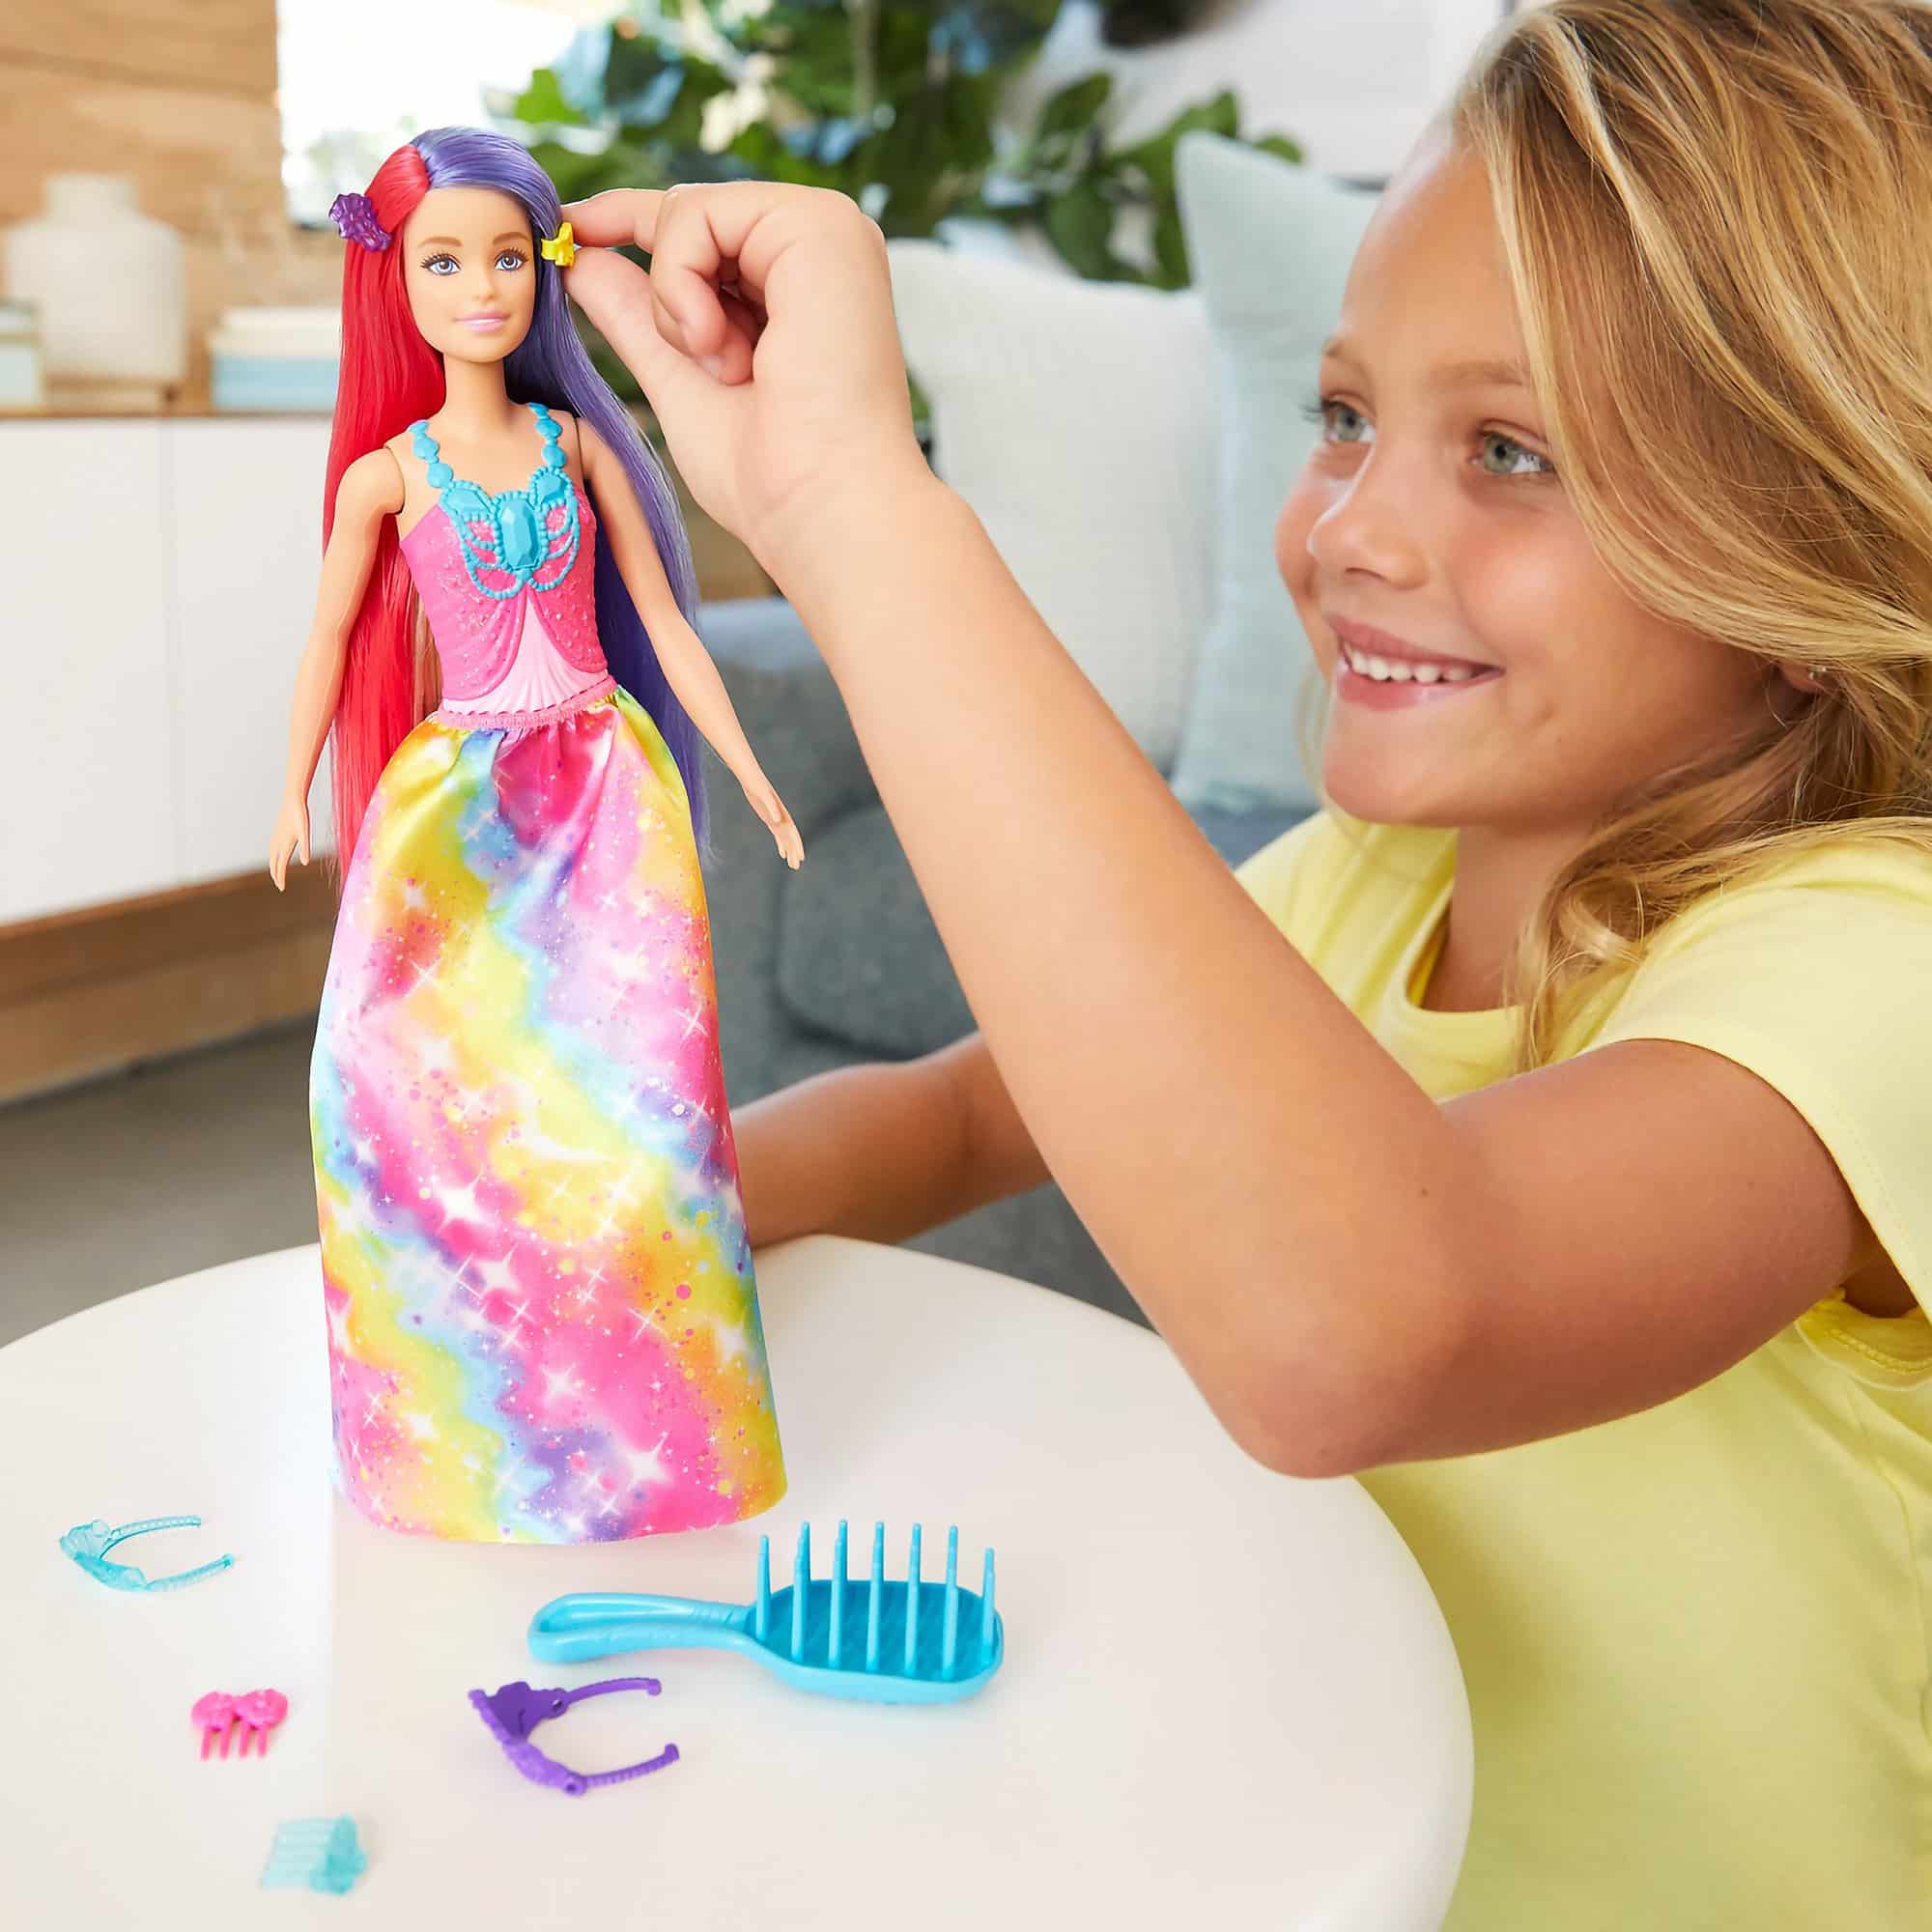 Barbie Dreamtopia - Fantasy Hair - Princess